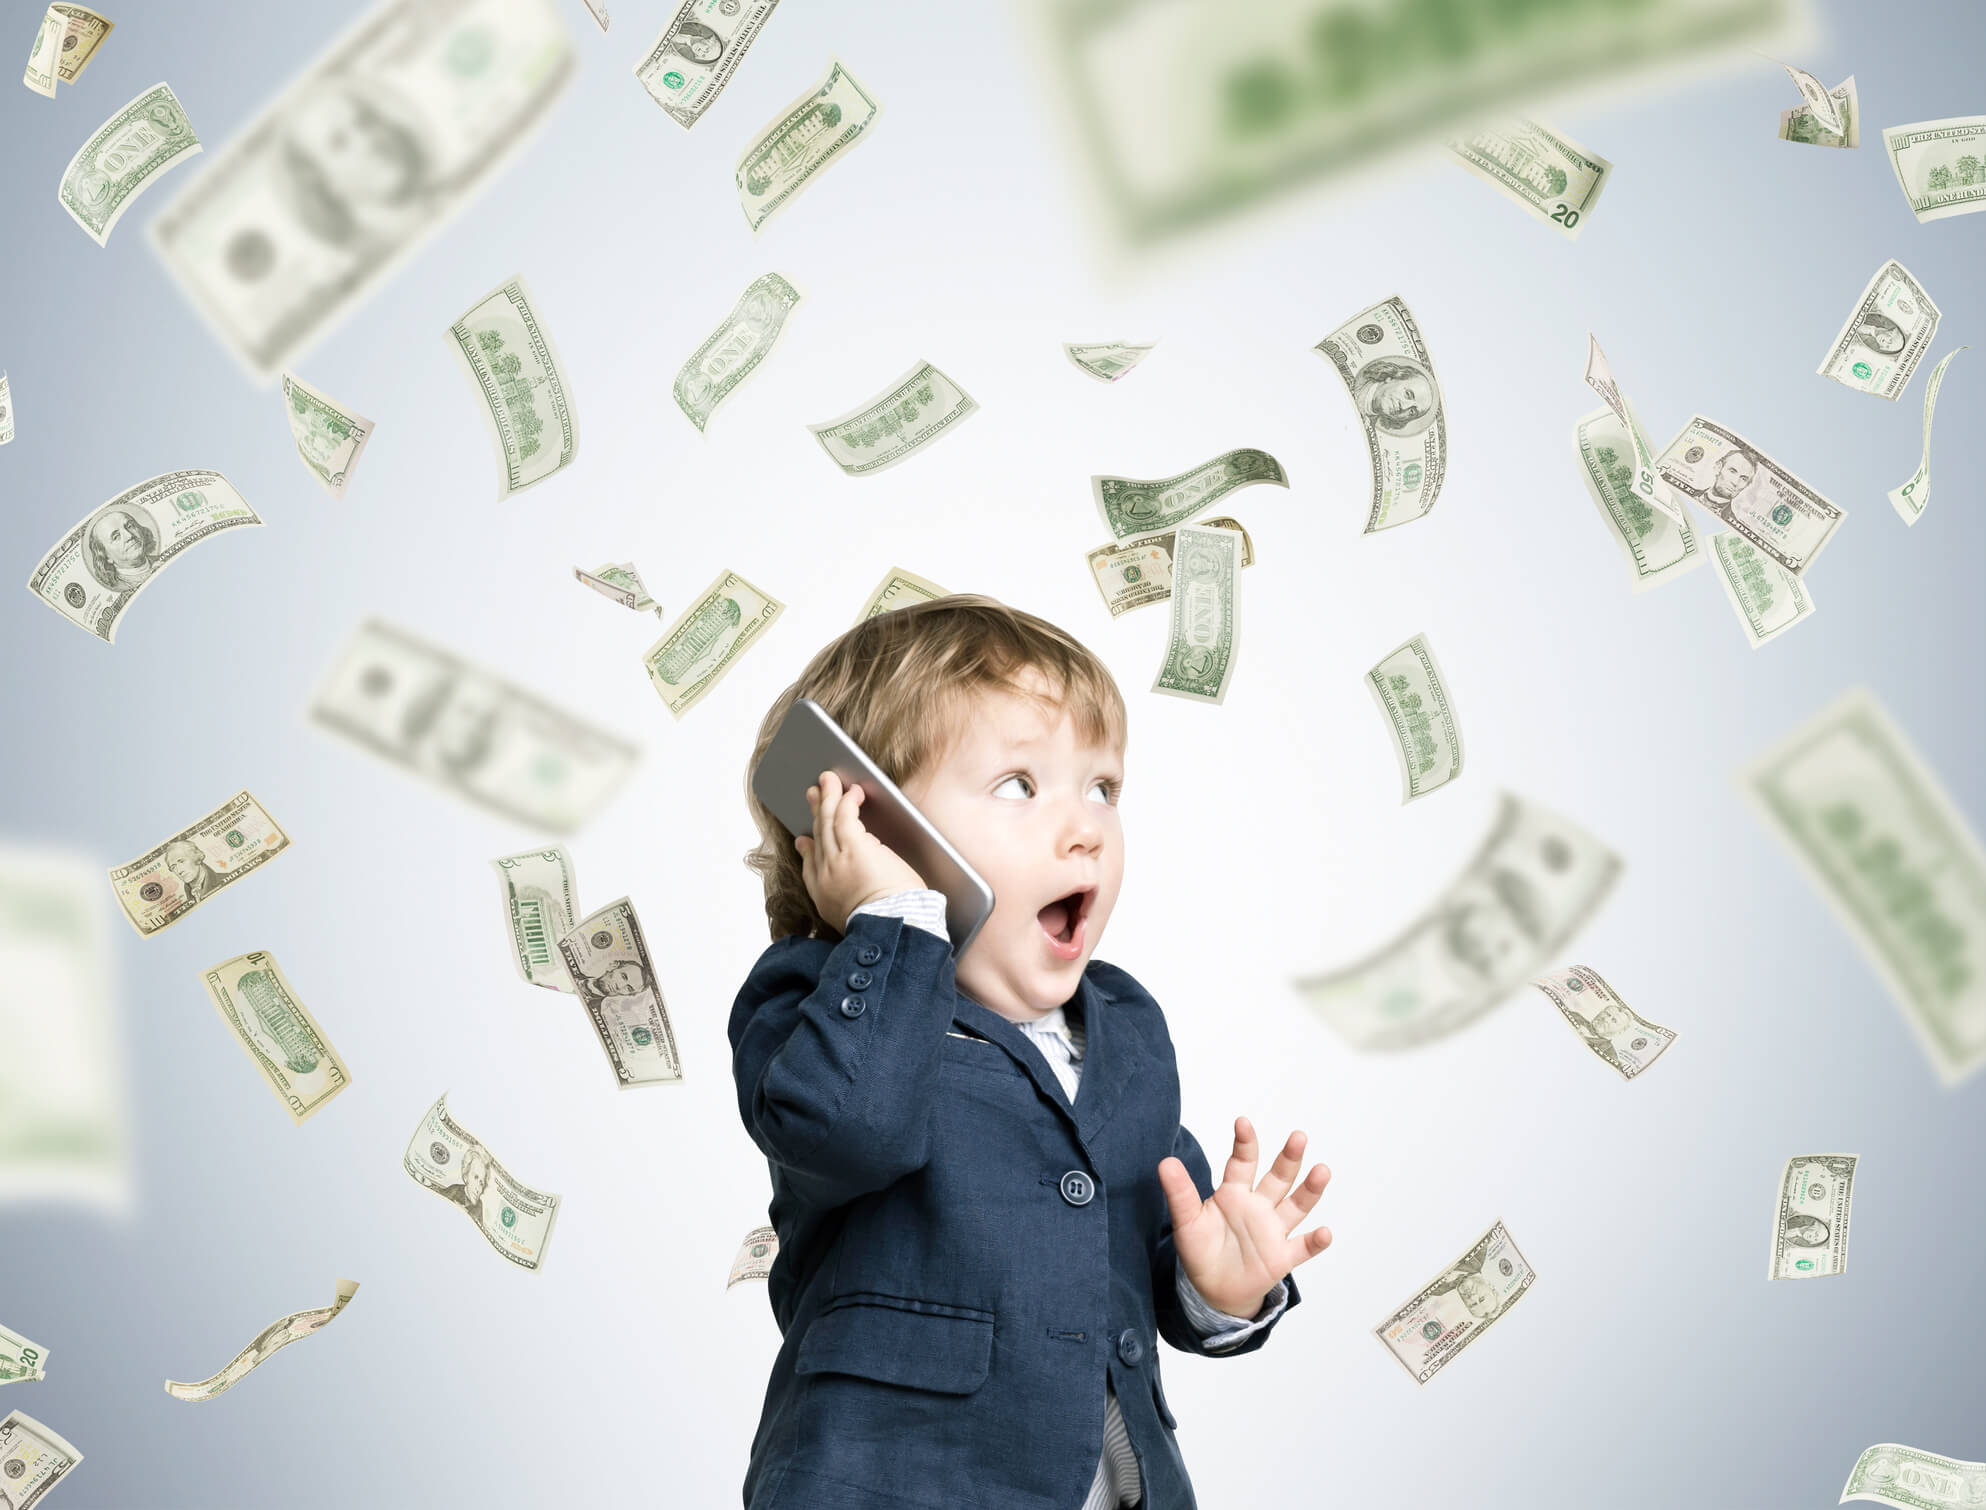 teach kids money management - Complete Controller